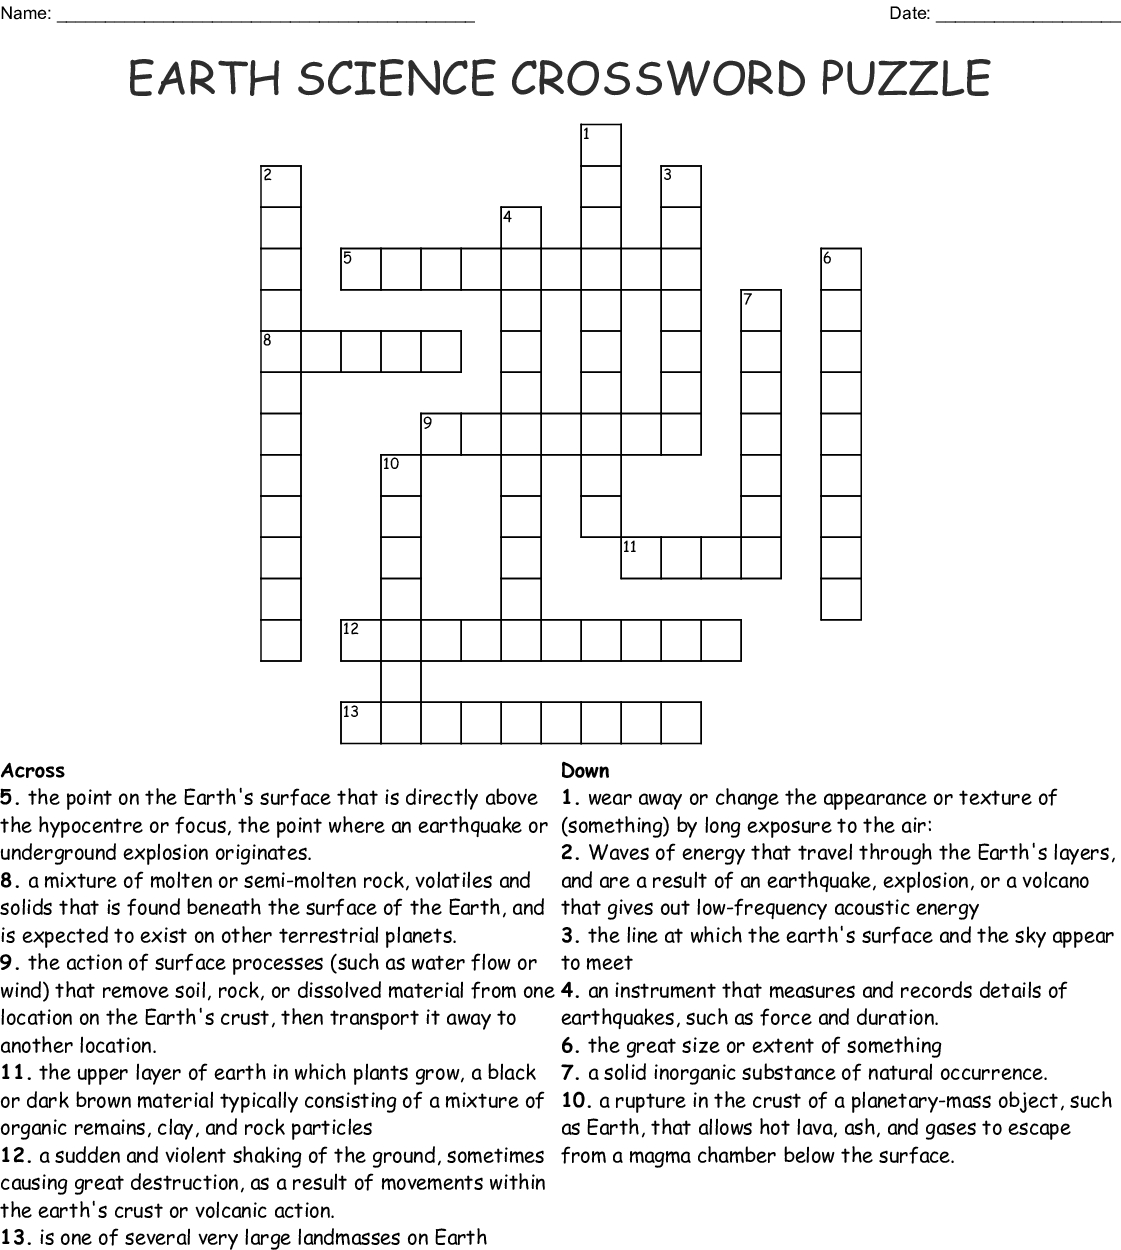 Earth Science Crossword Puzzle Crossword - Wordmint - Science Crossword Puzzles Printable